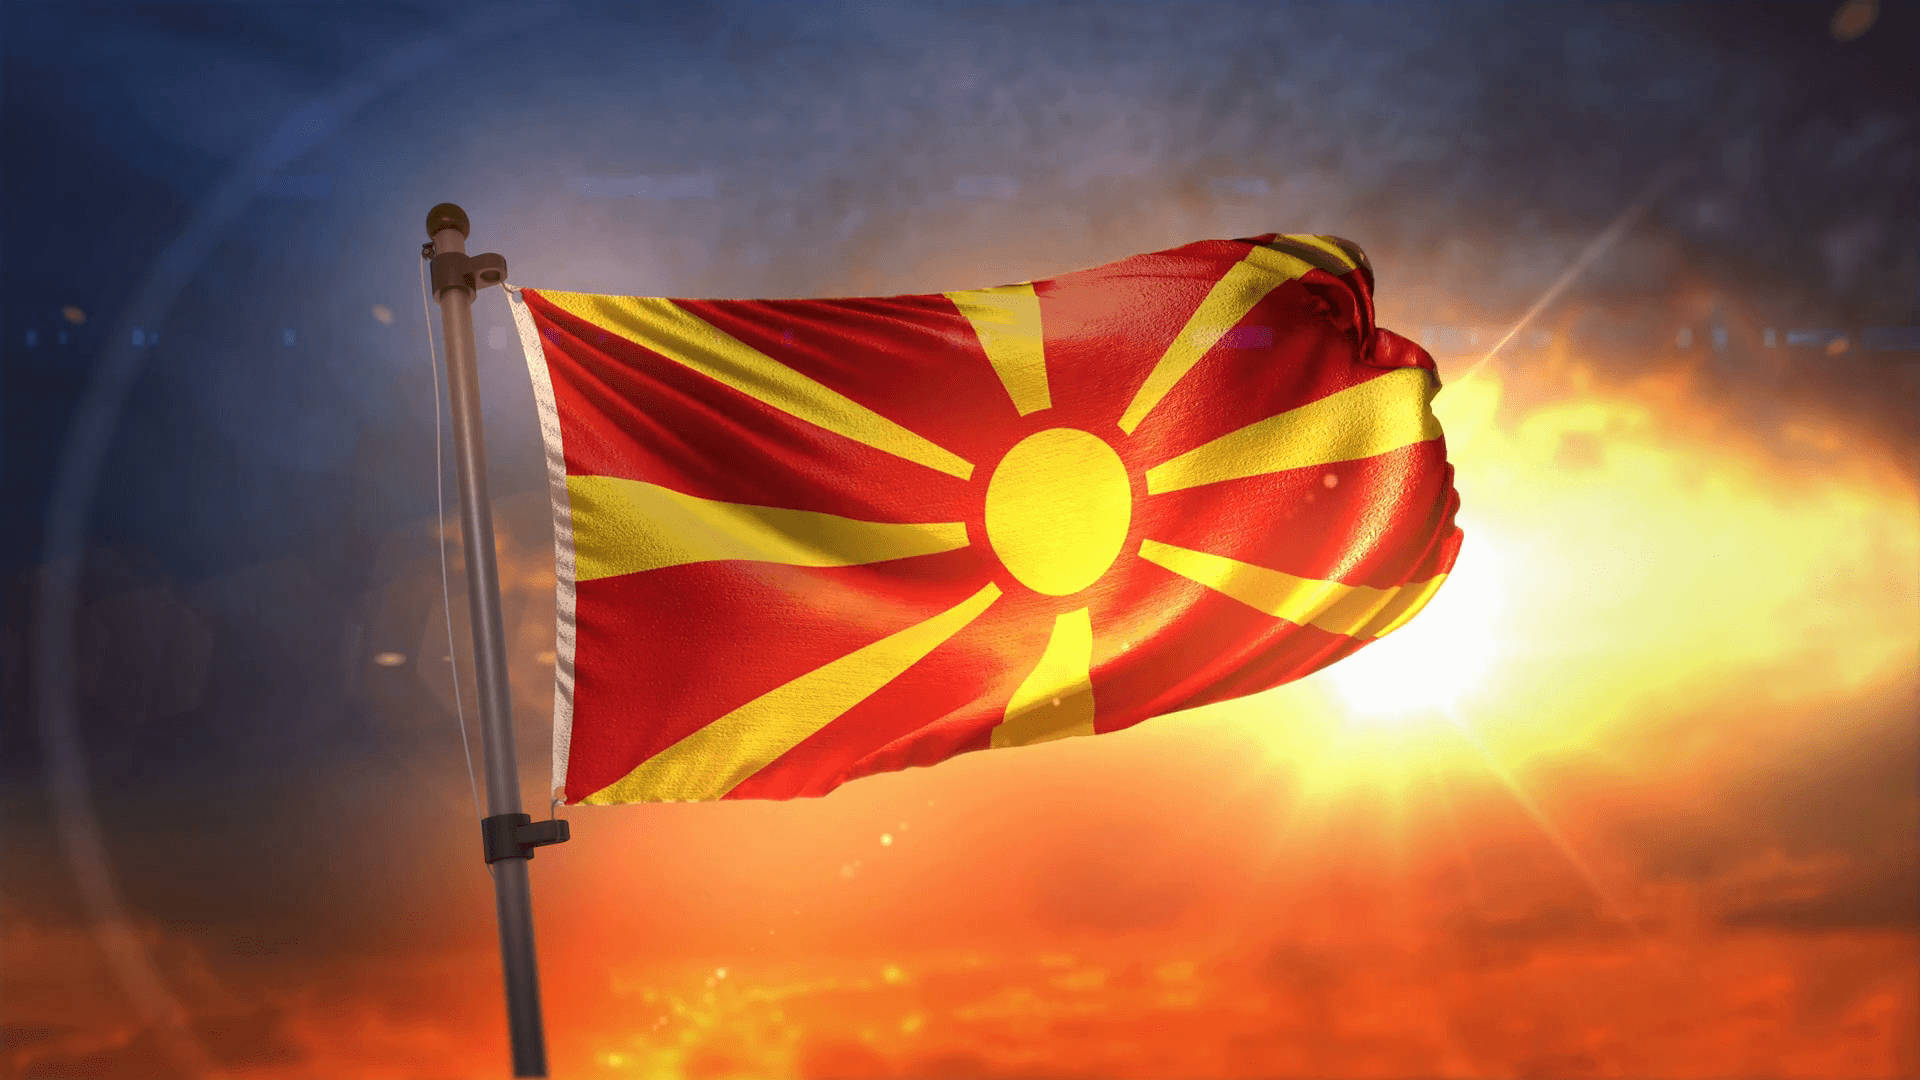 Macedonia Flag Against Bright Sun Background